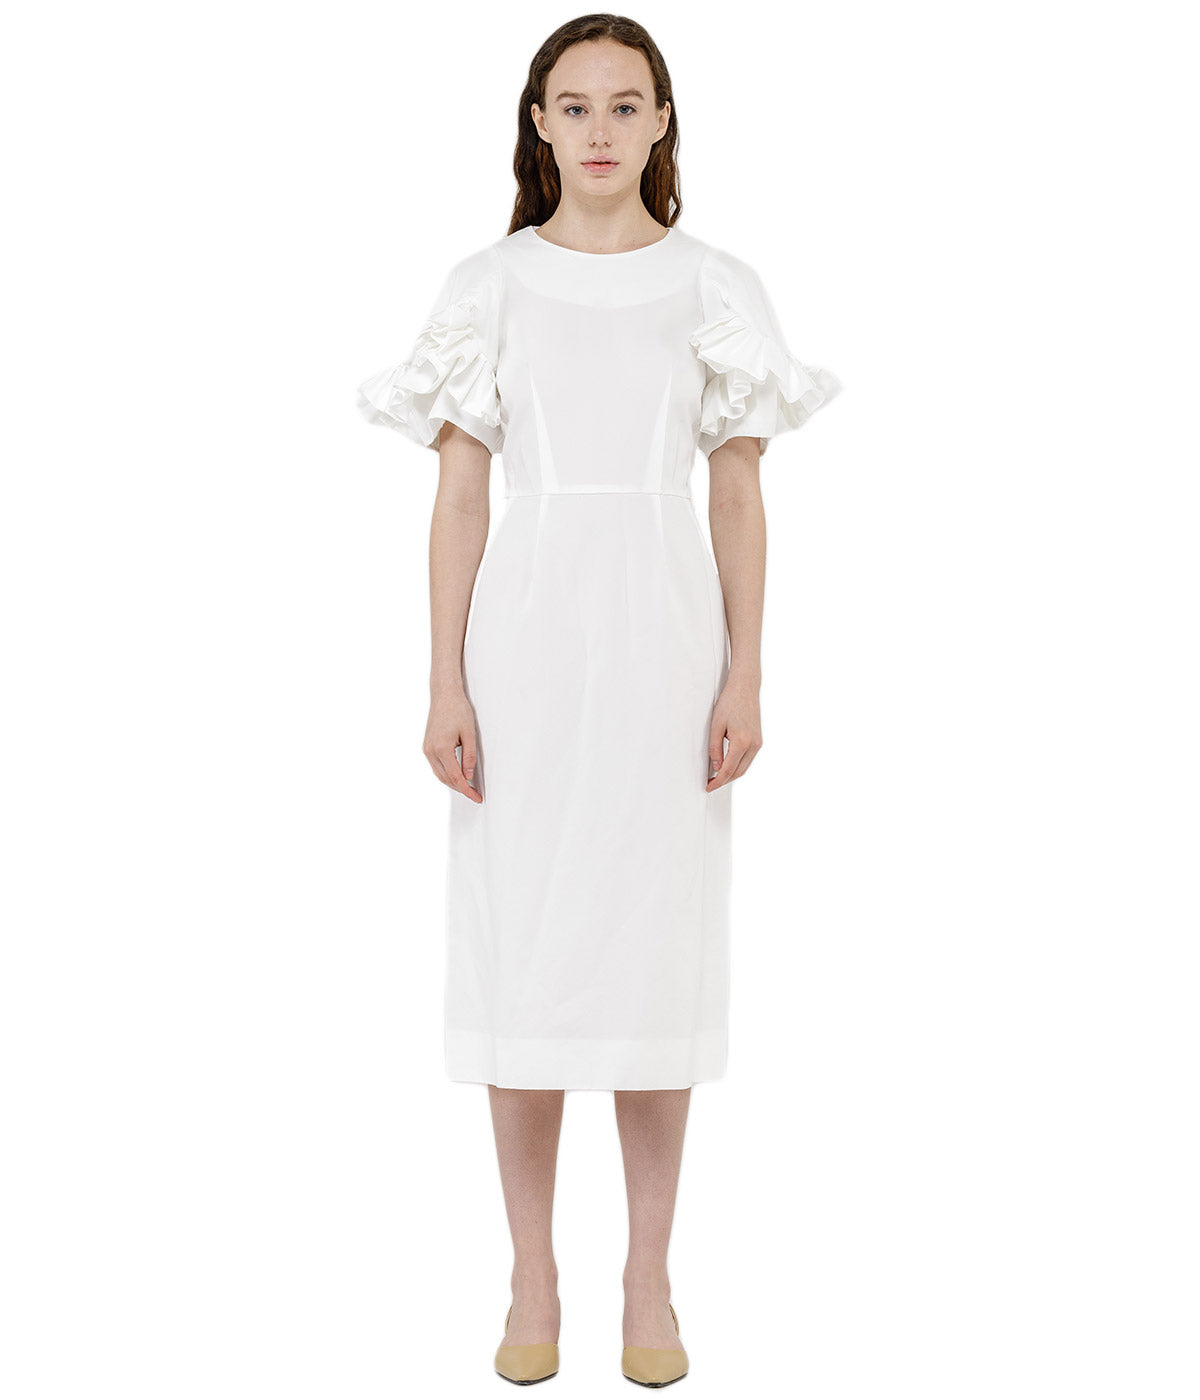 White Ruffle Dress